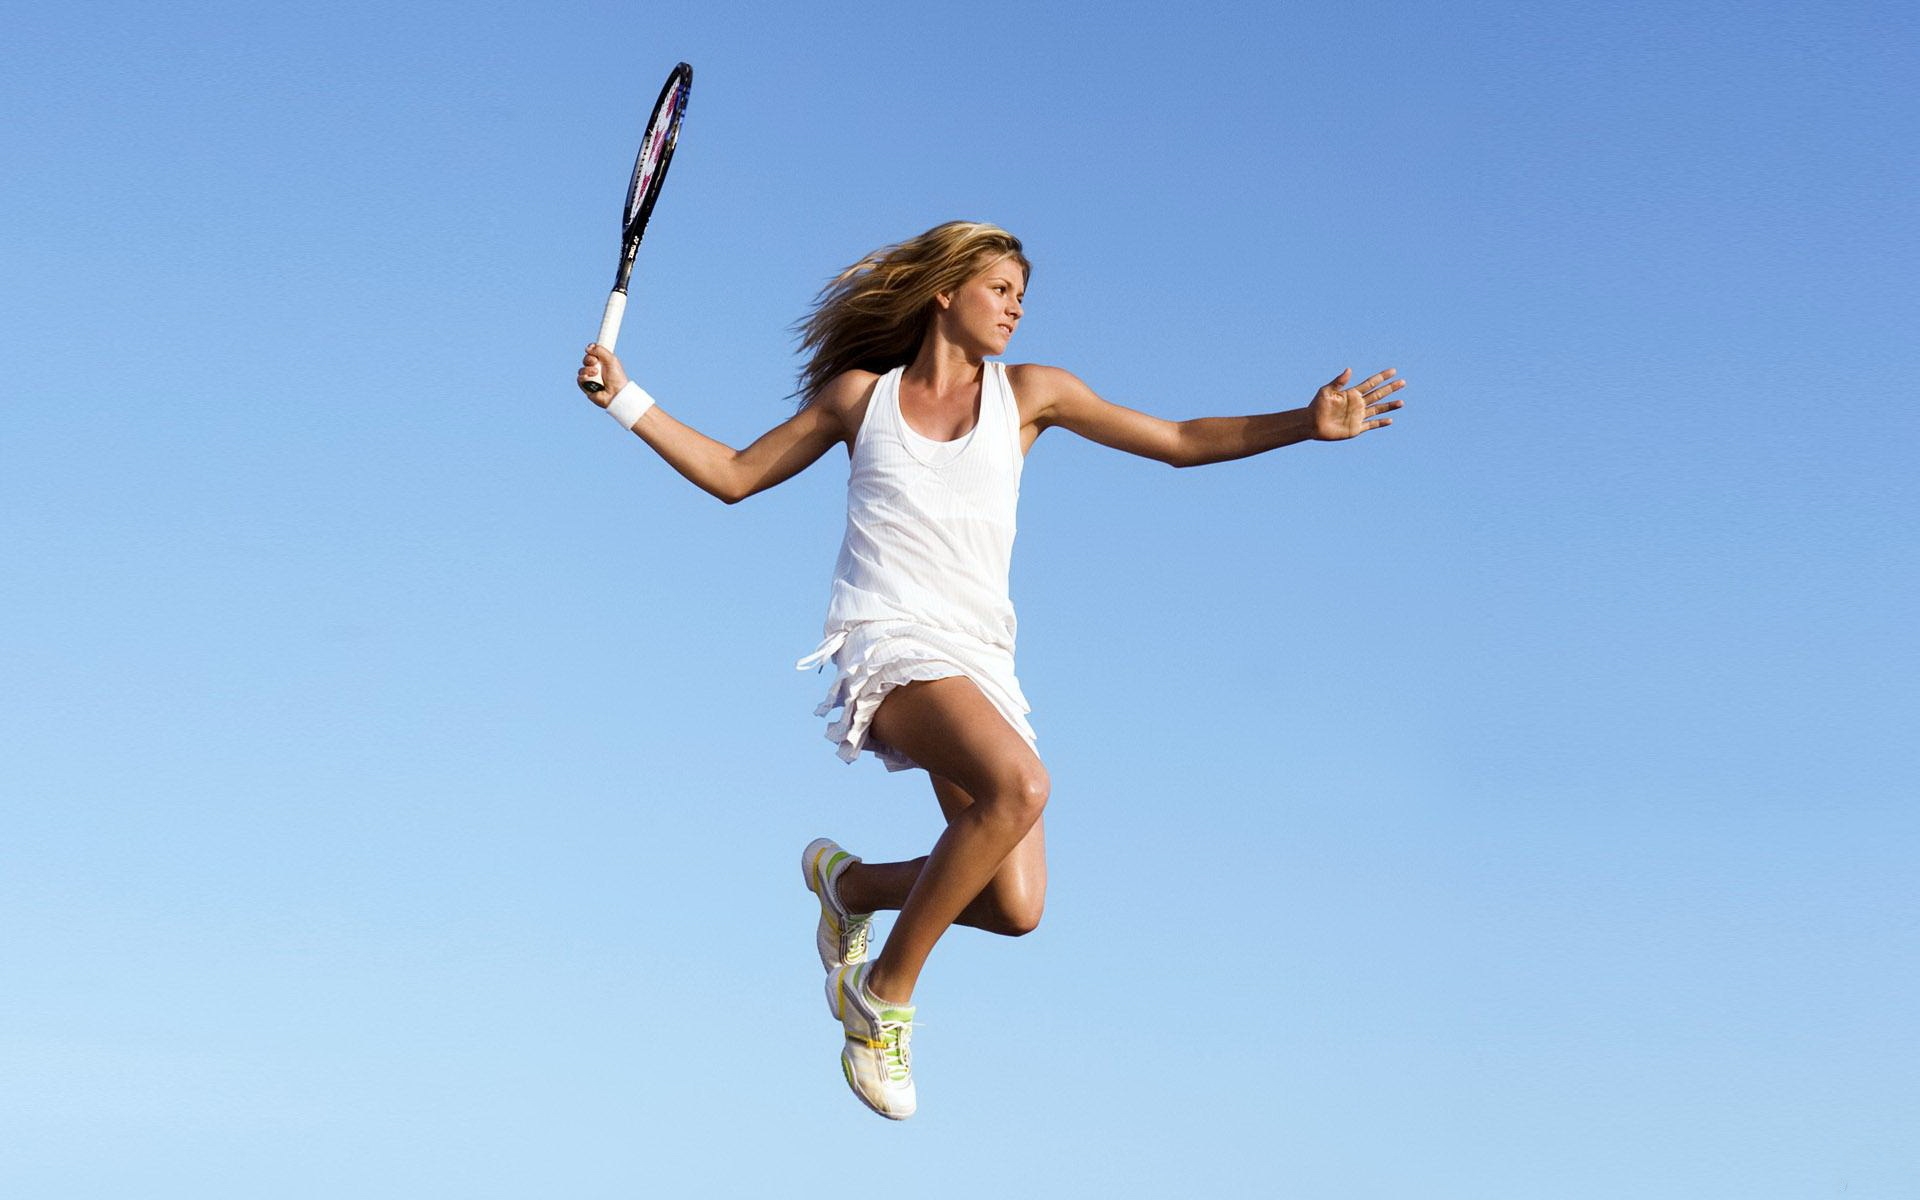 Картинки Maria kirilenko, теннис, ракетка, прыжок, рука фото и обои на рабочий стол